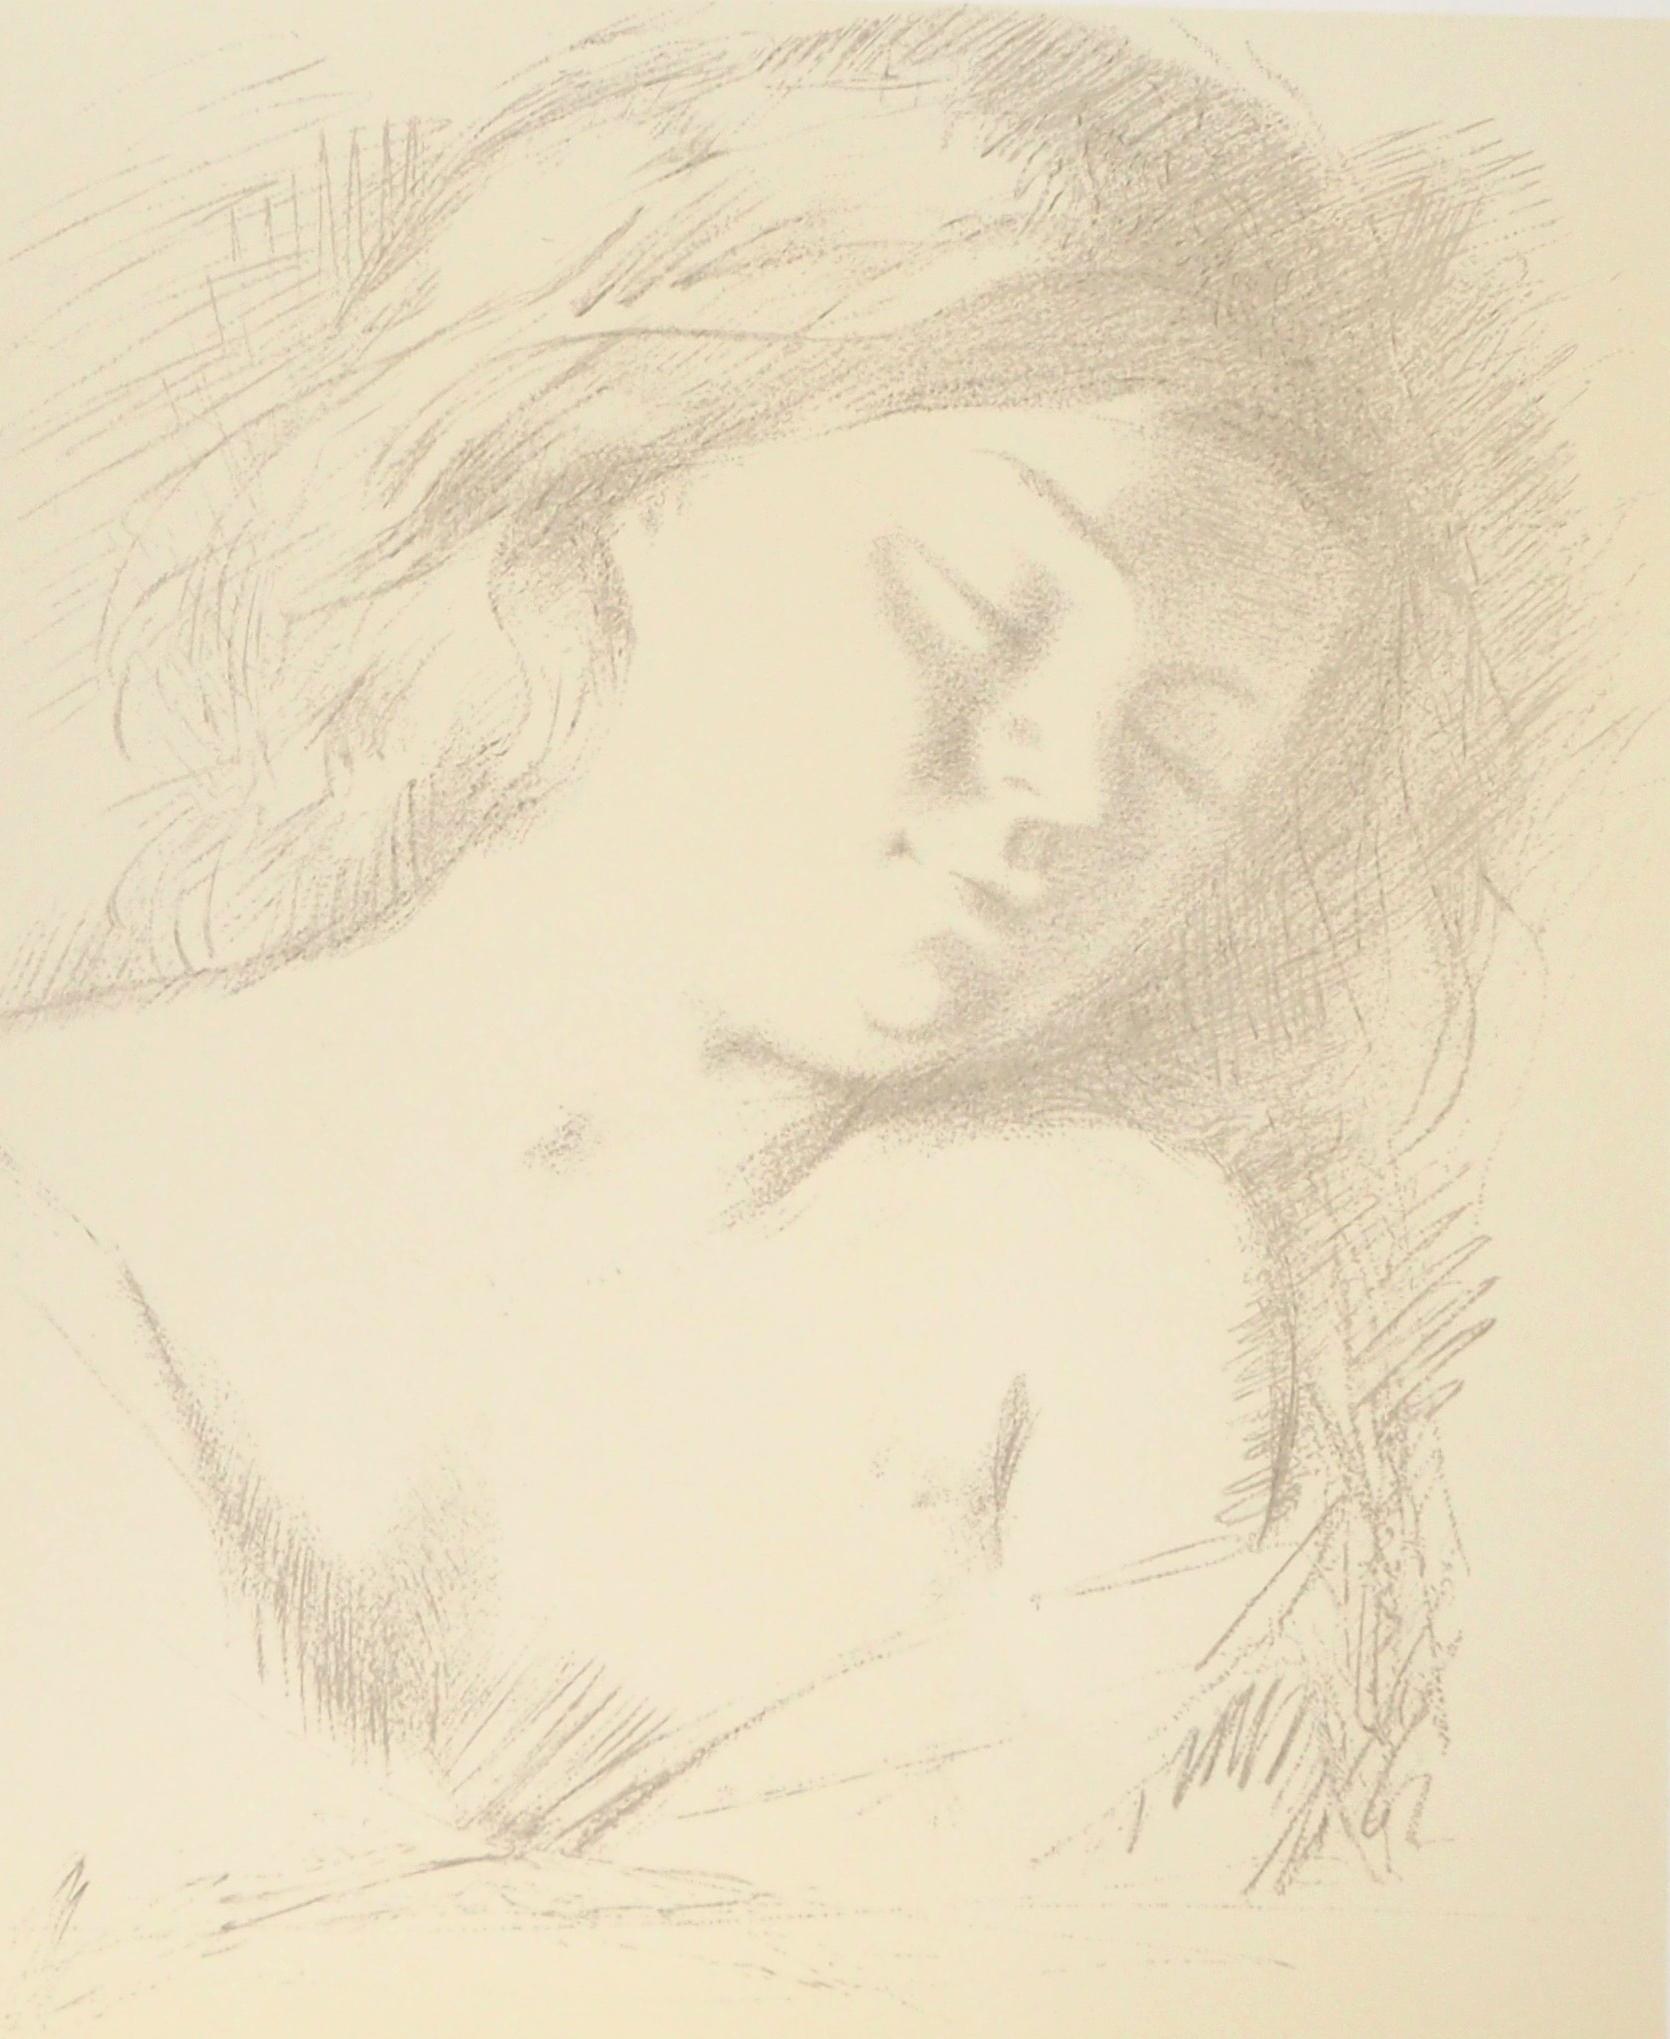 Balthus Portrait Print - Portrait of Sleeping Girl - Original handsigned lithograph